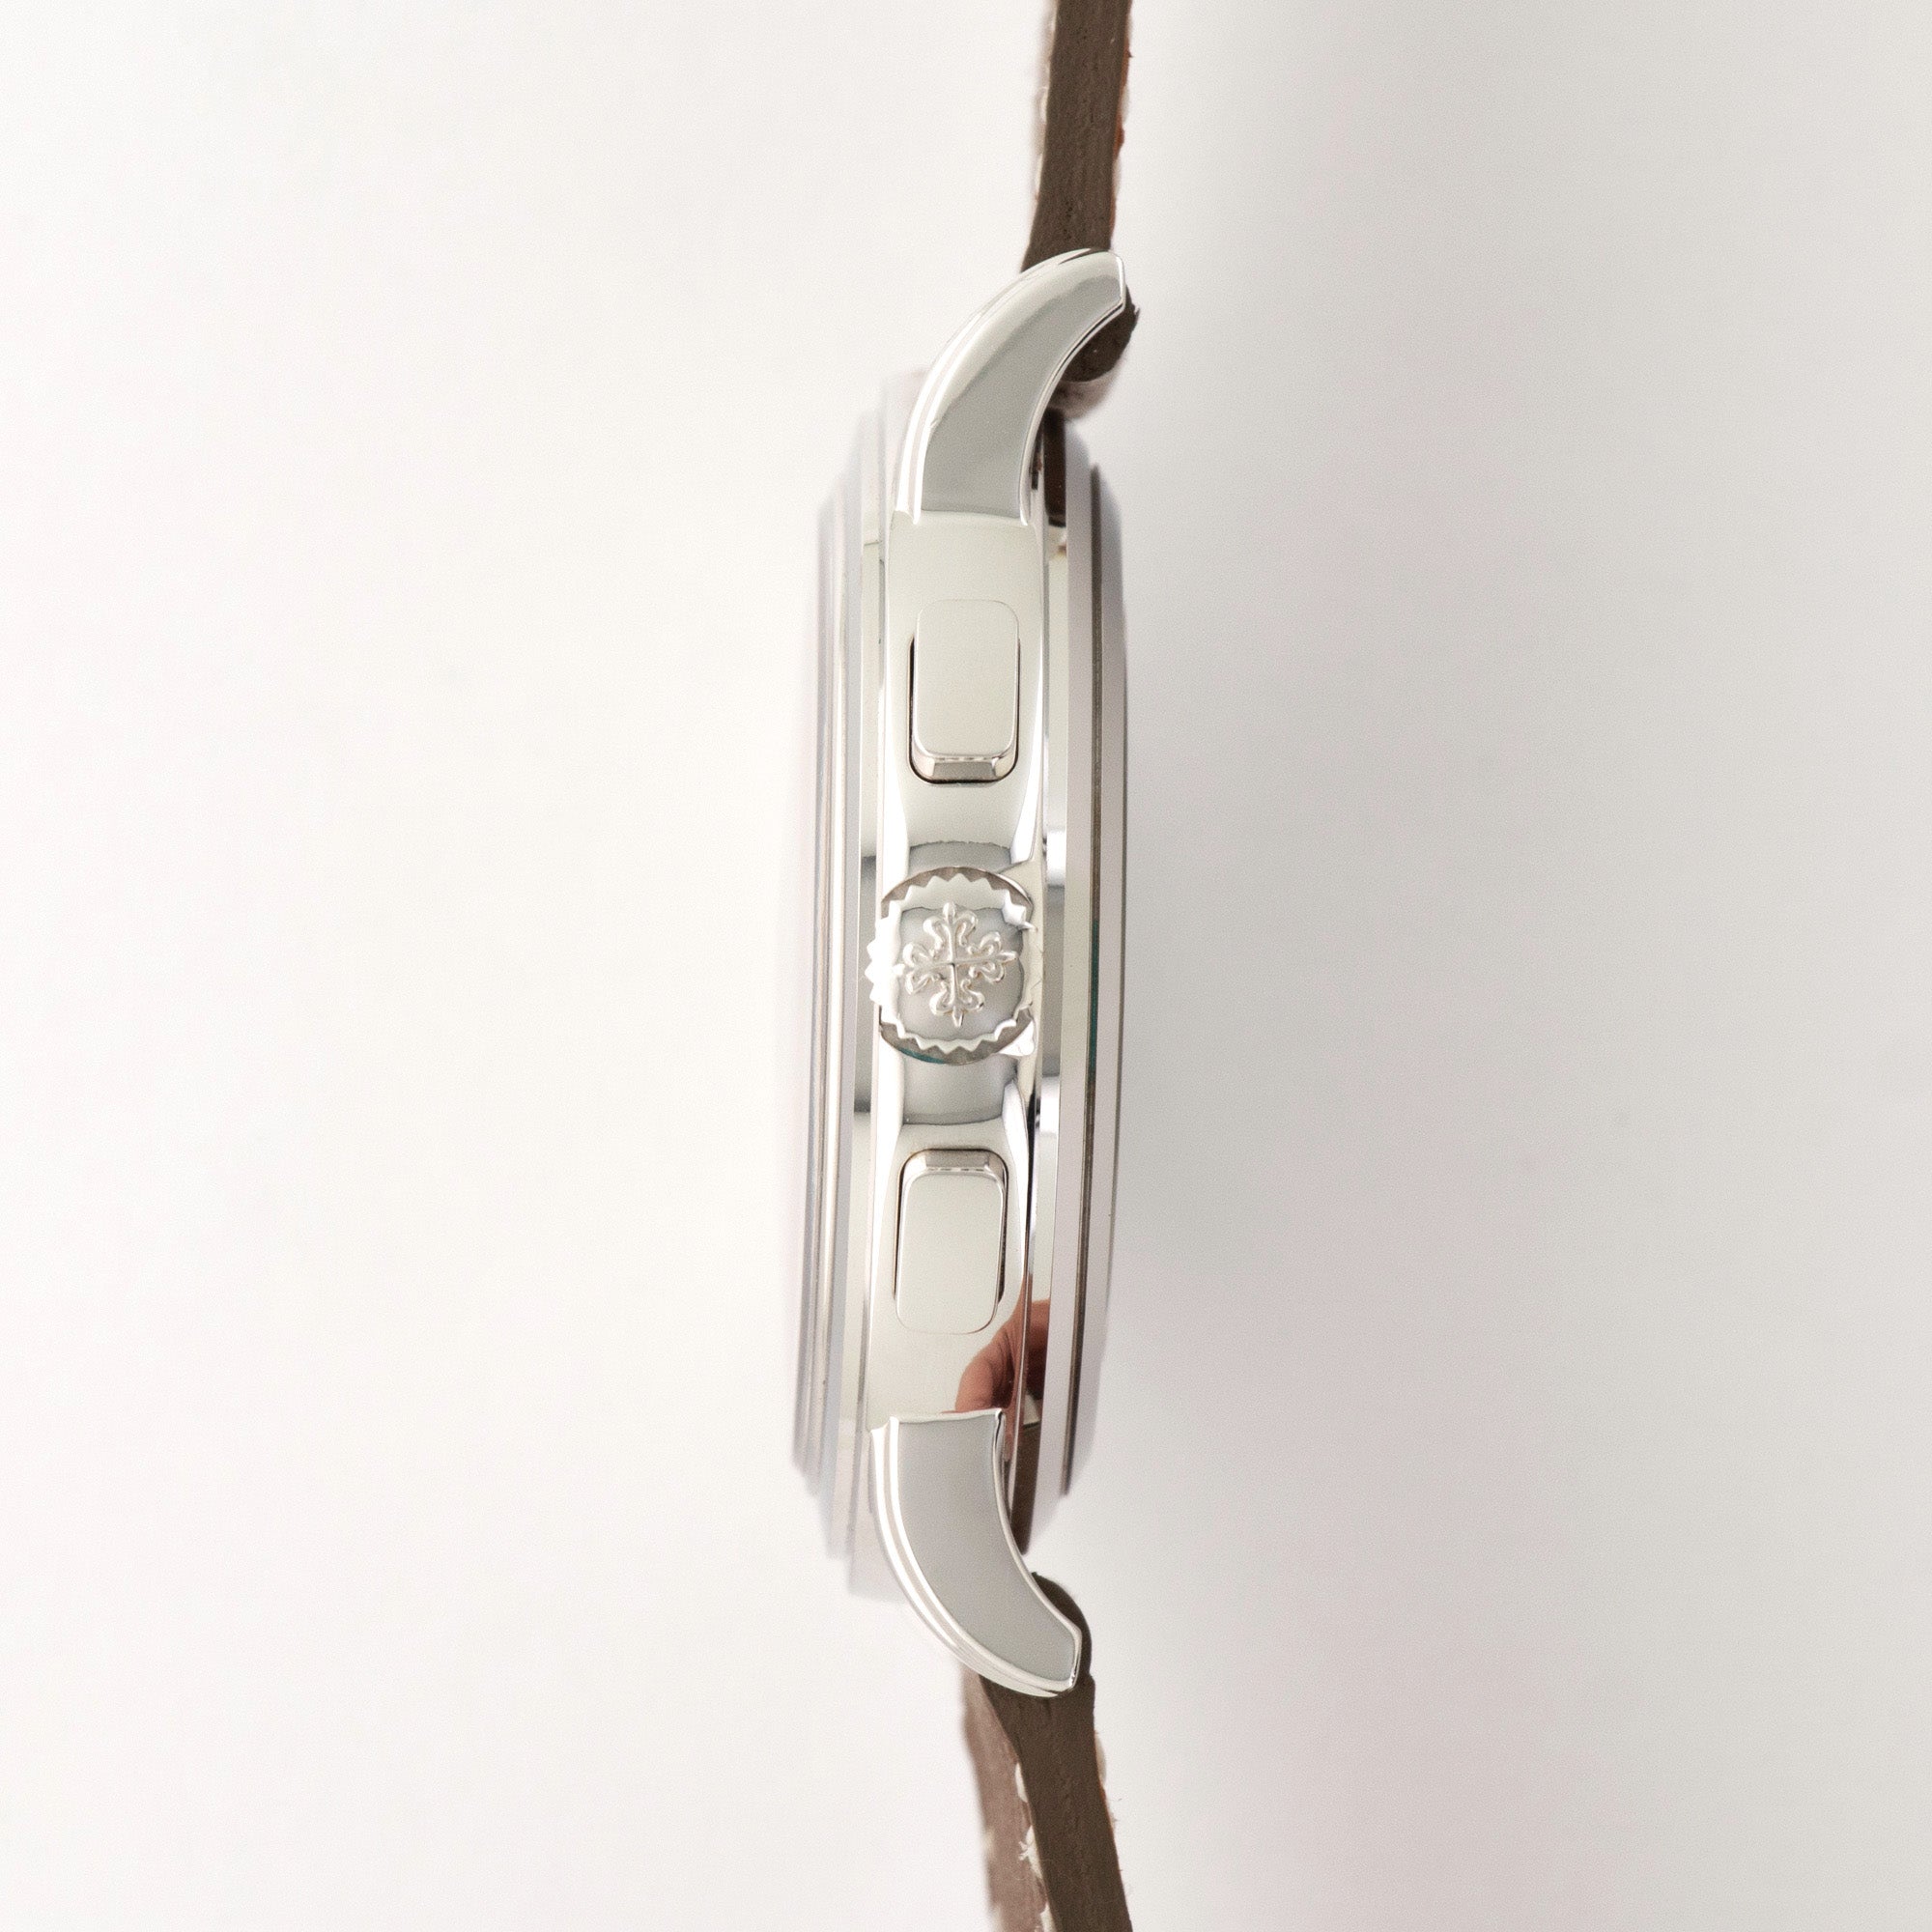 Patek Philippe - Patek Philippe White Gold Chronograph Watch Ref. 5070 - The Keystone Watches